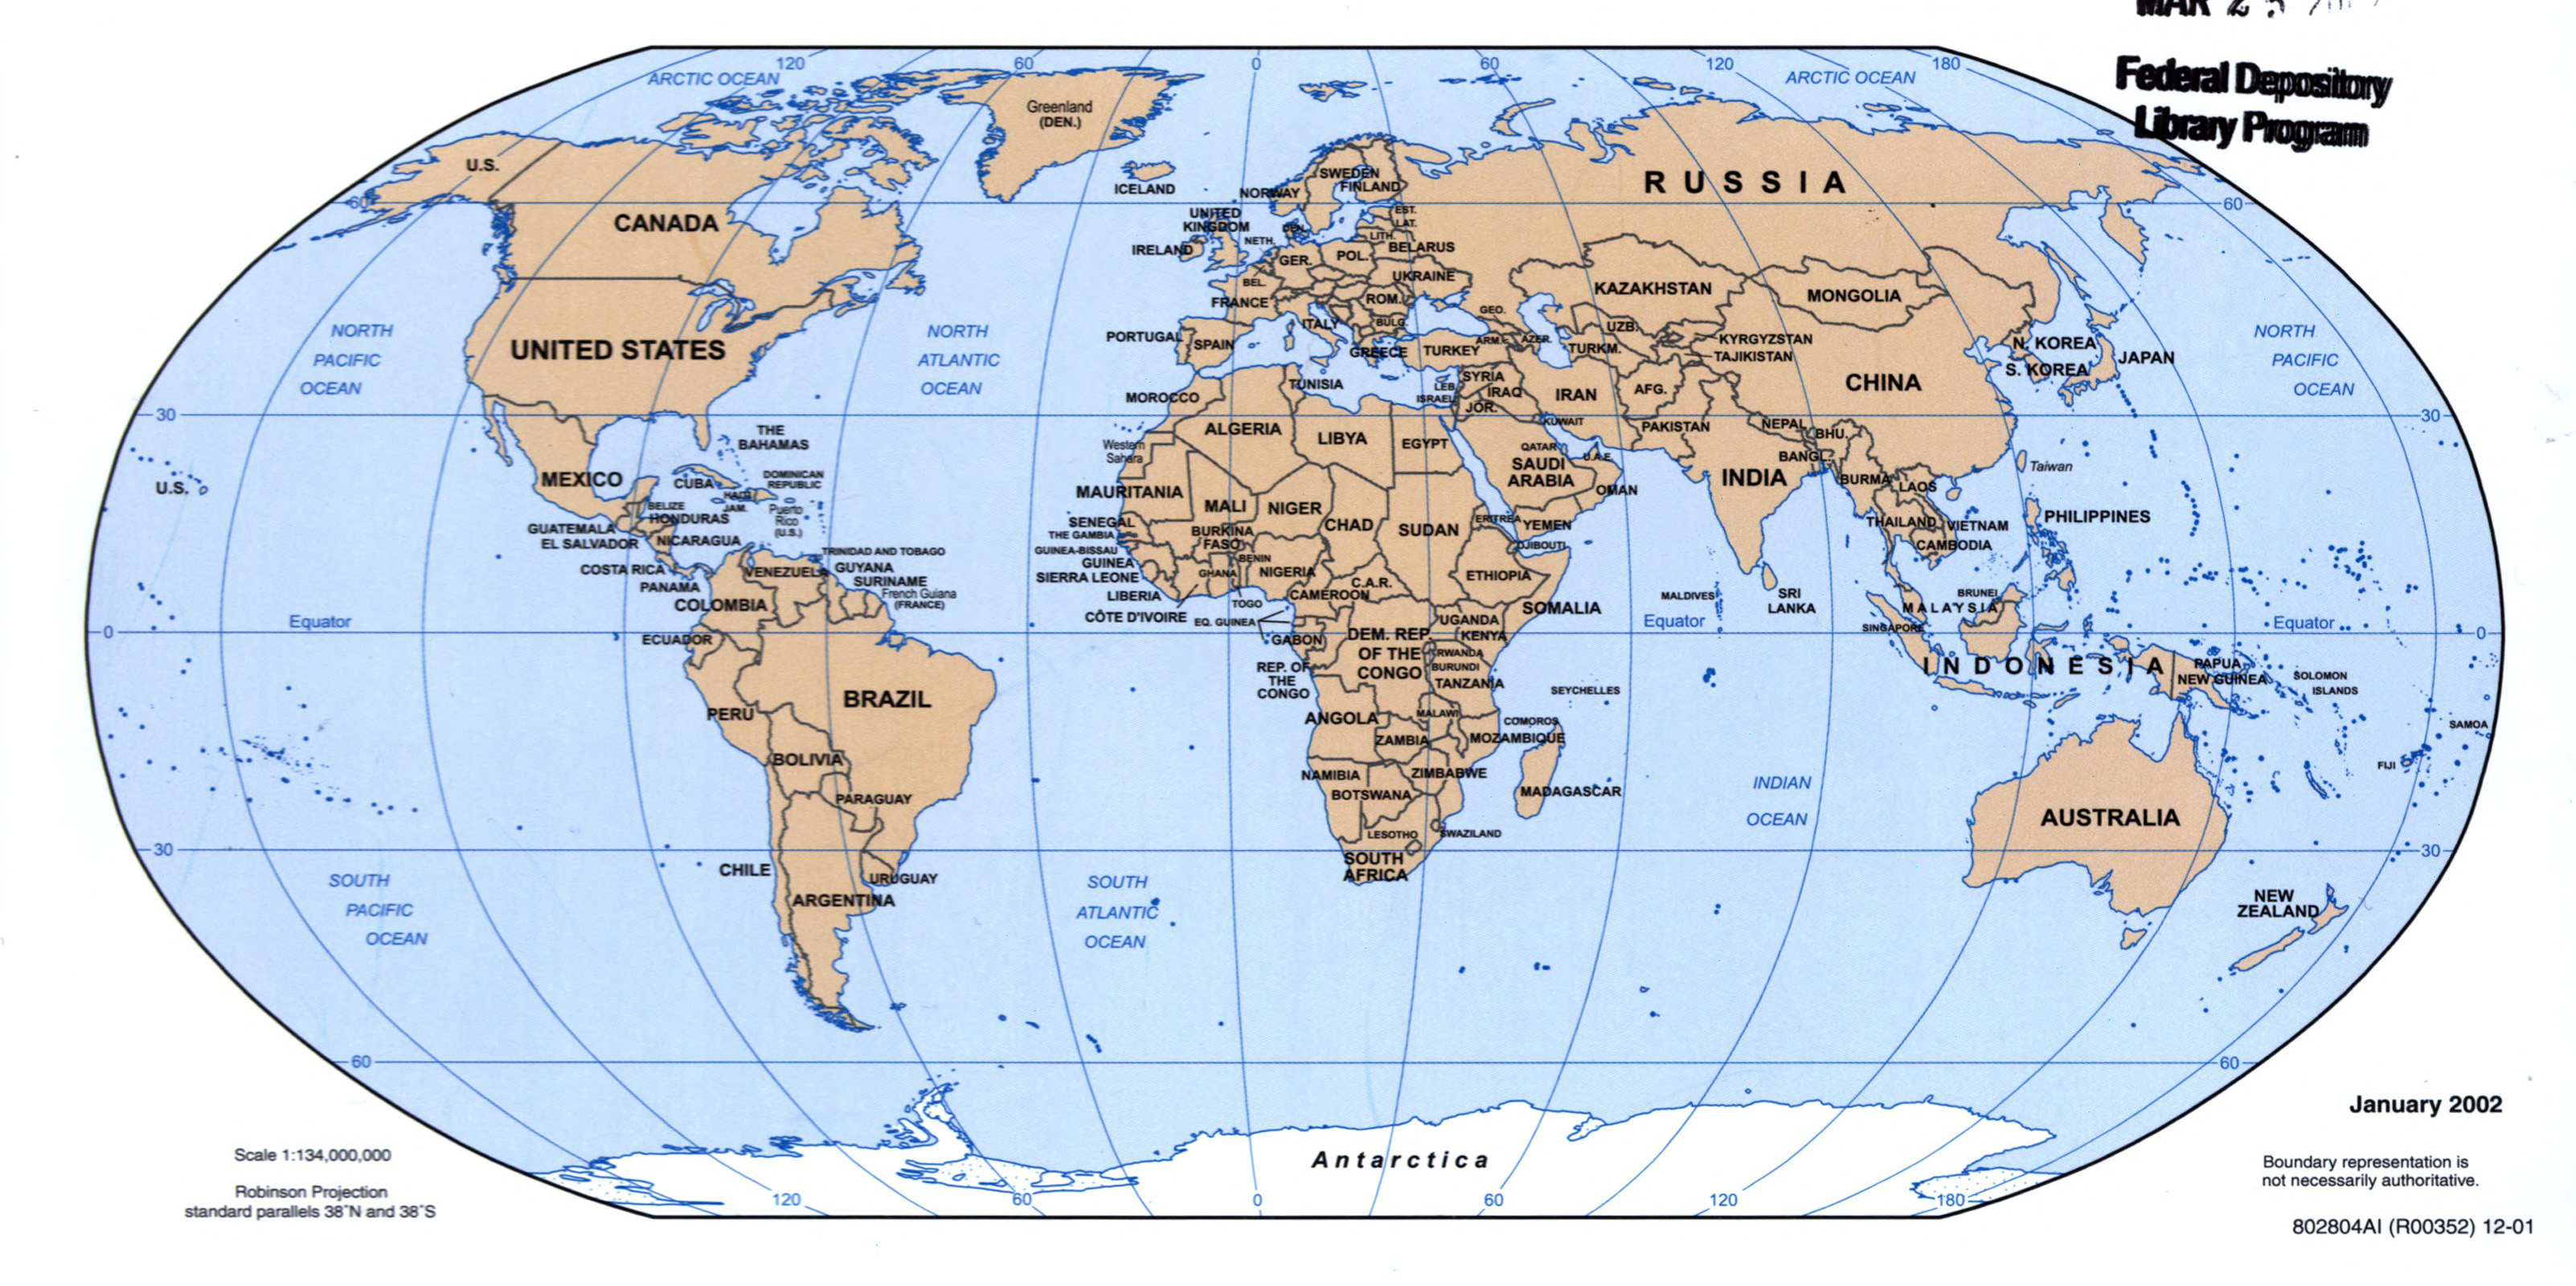 Mapa político a gran escala del mundo - 1992, Mundo